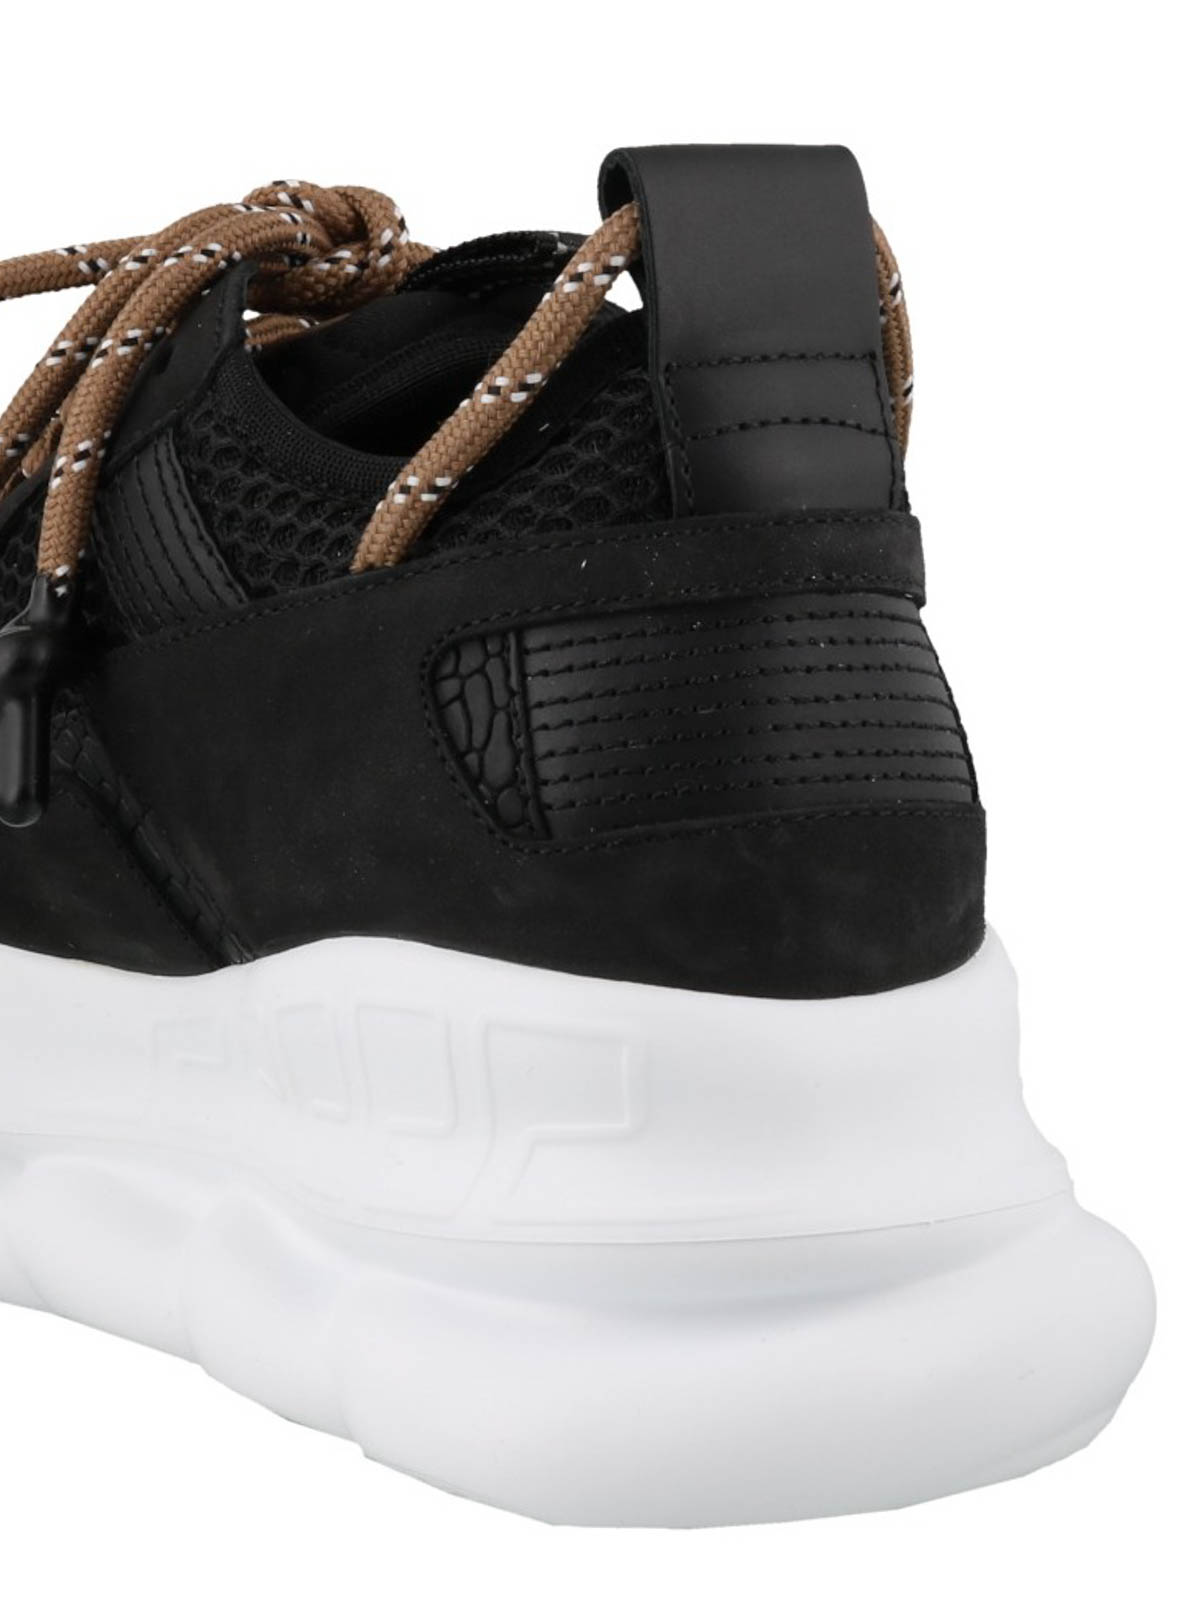 Versace Chain Reaction 2 Sneakers In Black